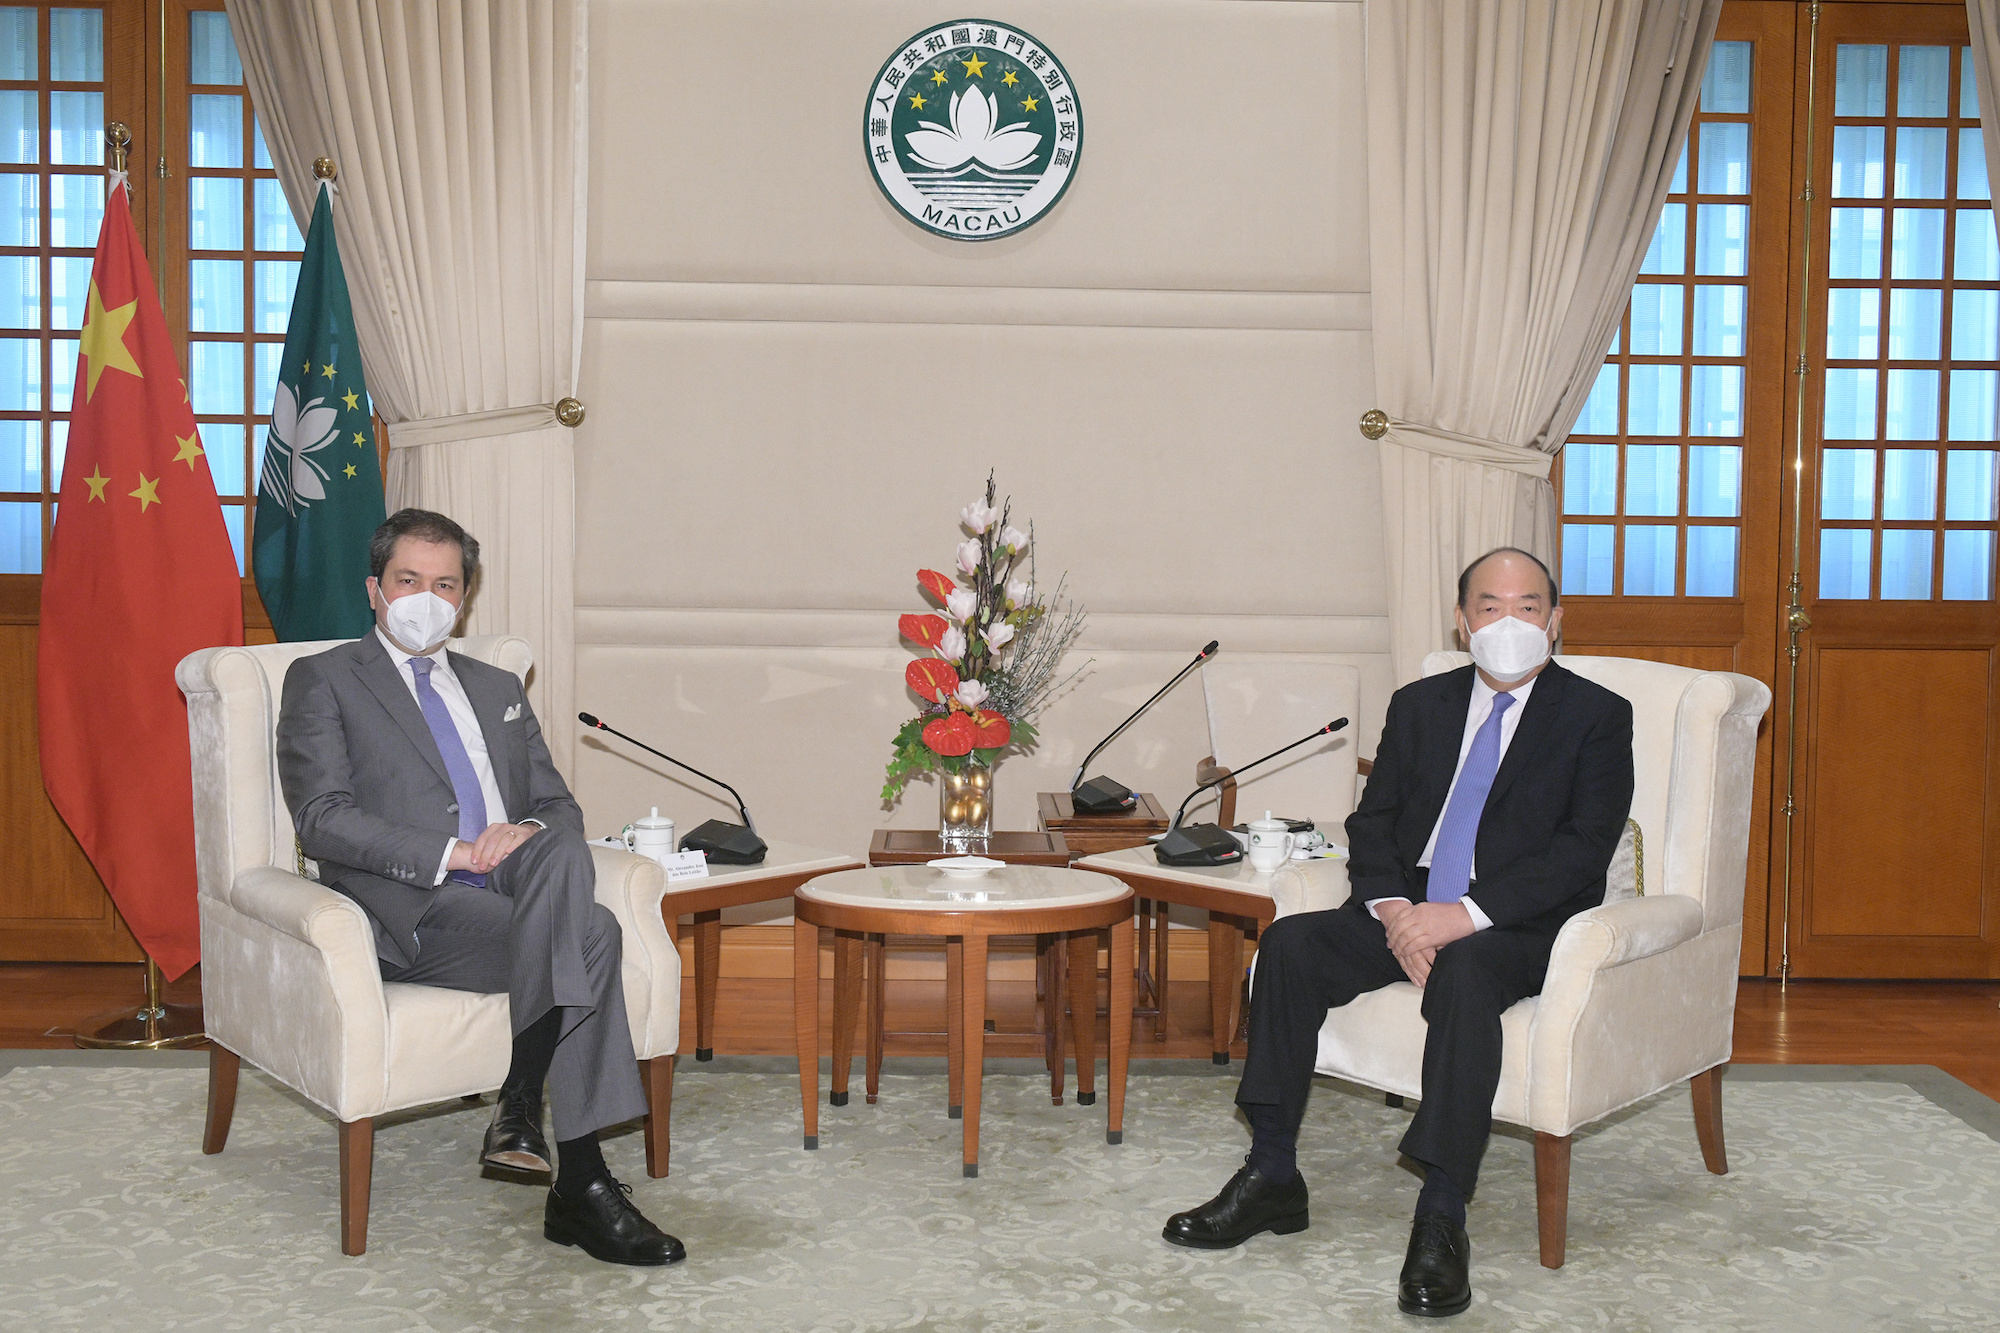 Chief Executive Ho Iat Seng and Consul-General of Portugal in Macao, Alexandre Leitão